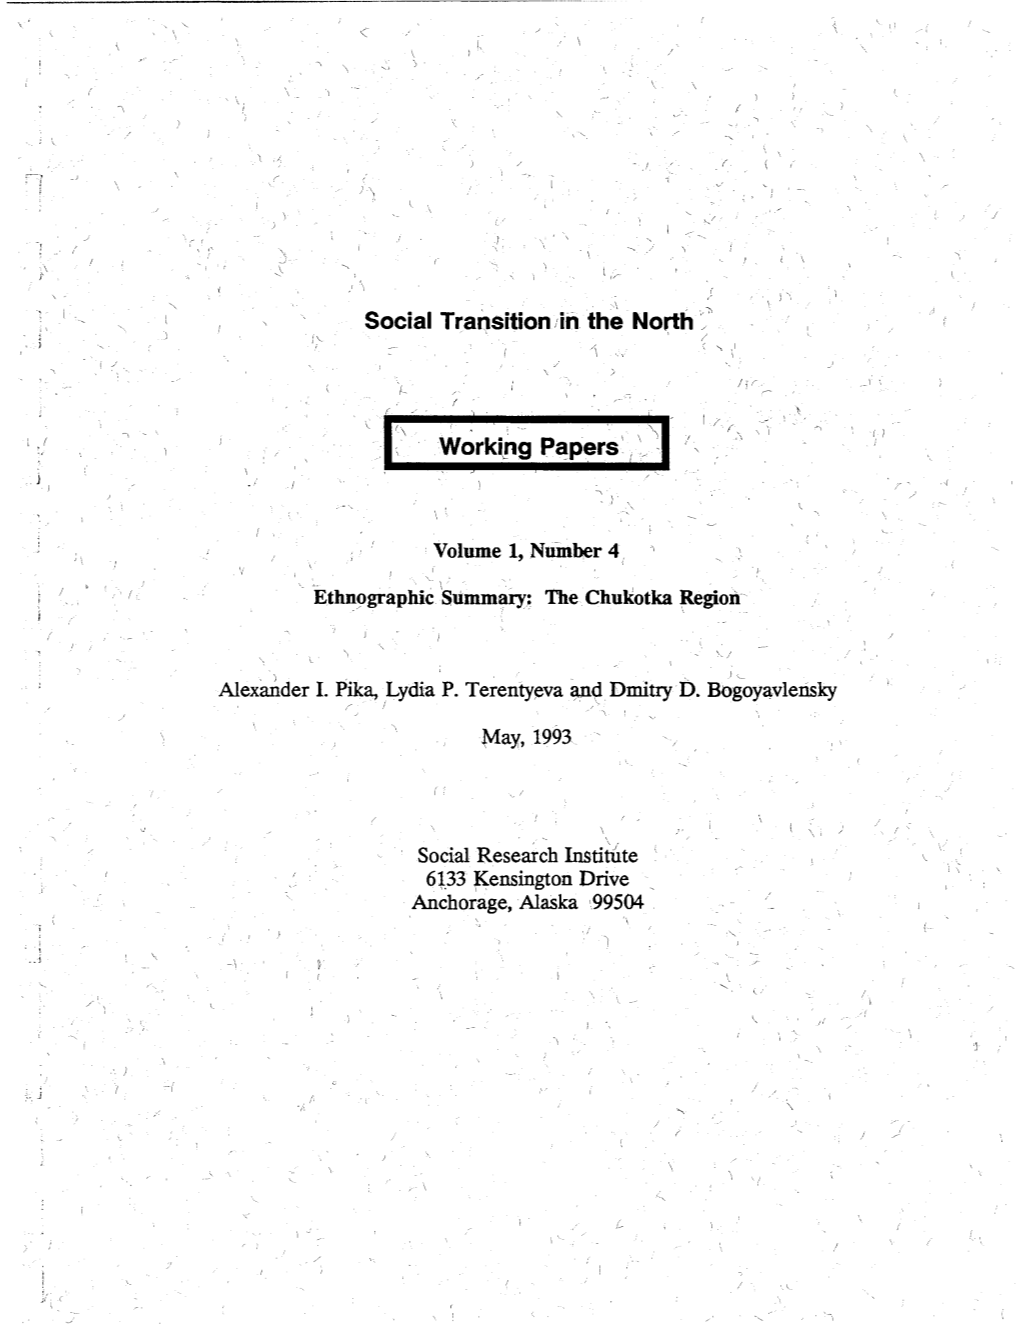 Social Transition in the North, Vol. 1, No. 4, May 1993